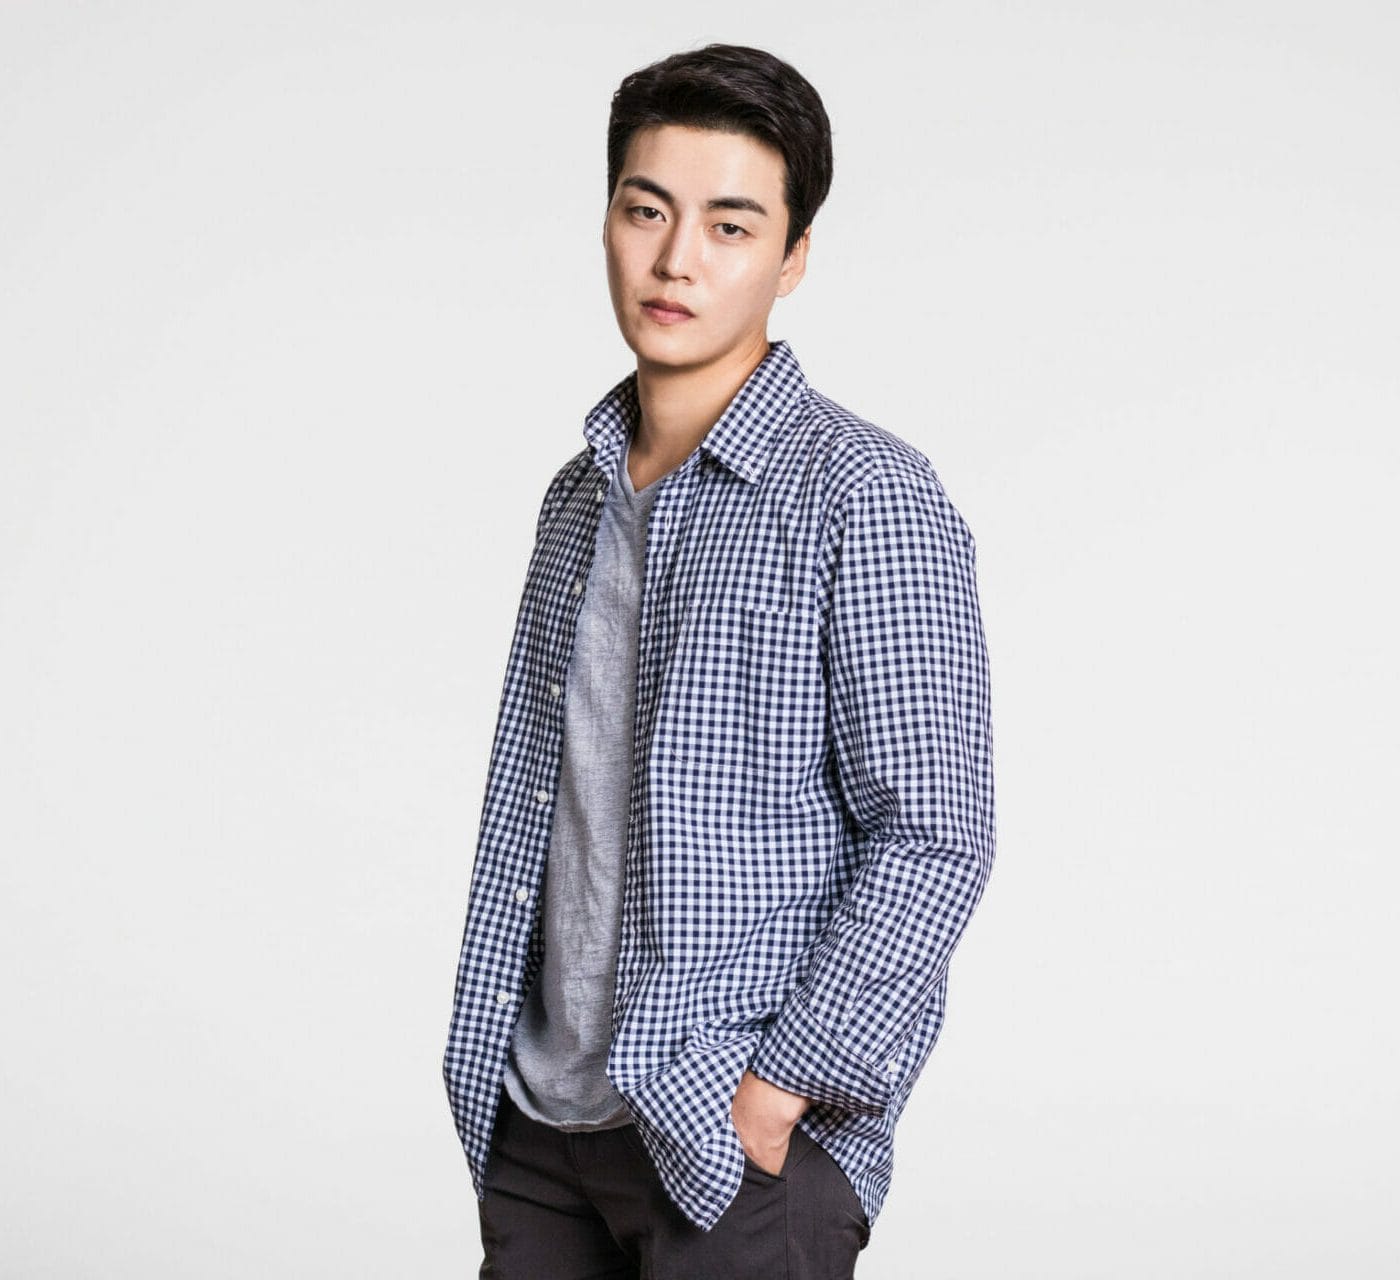 Korean Men's Fashion Aesthetic 2022